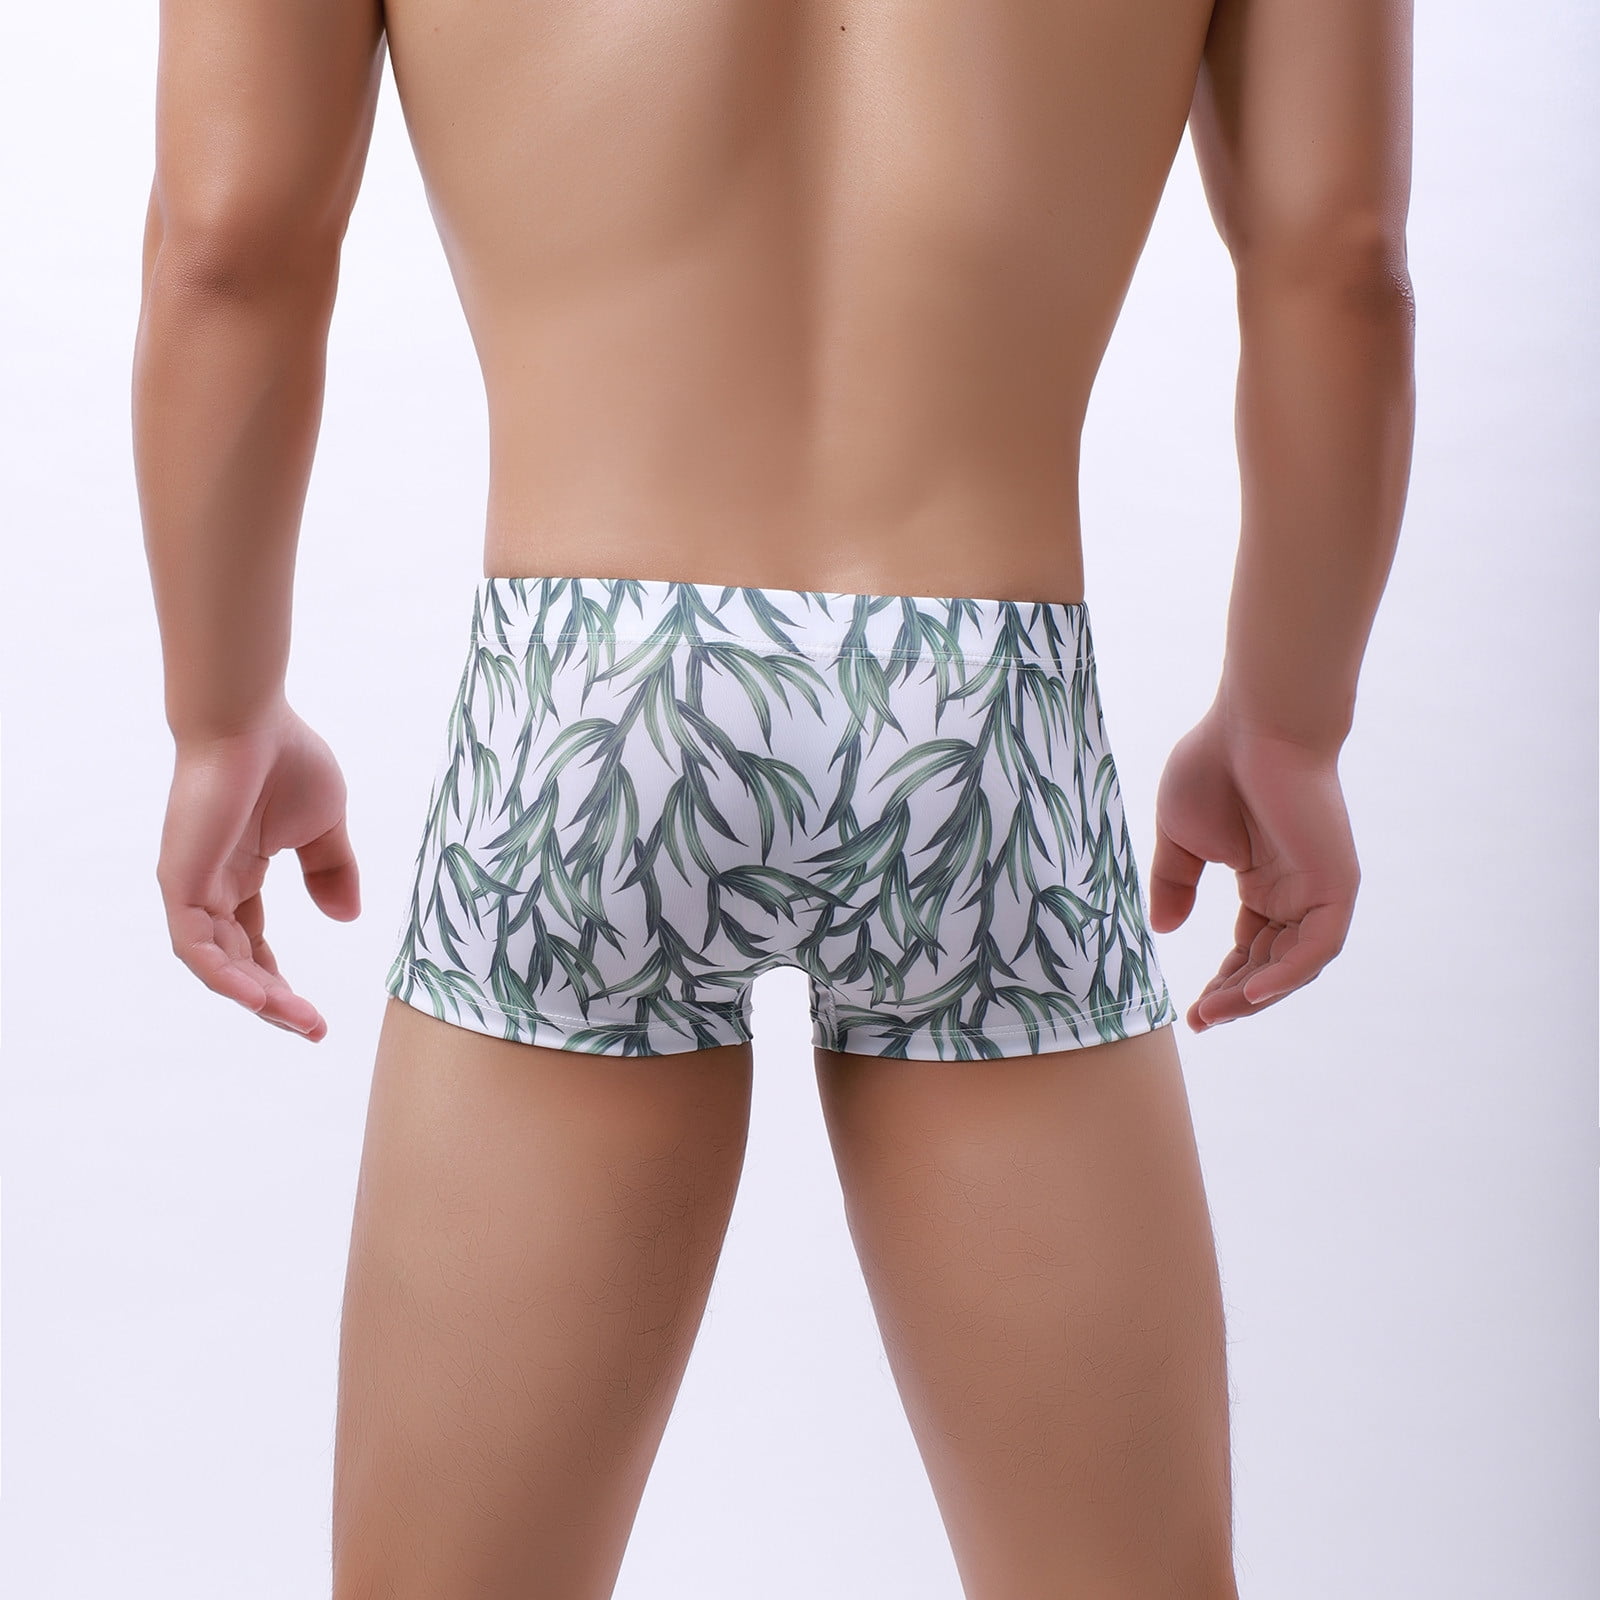 adviicd Underwear For Men Pack Briefs Men Printed Breathable